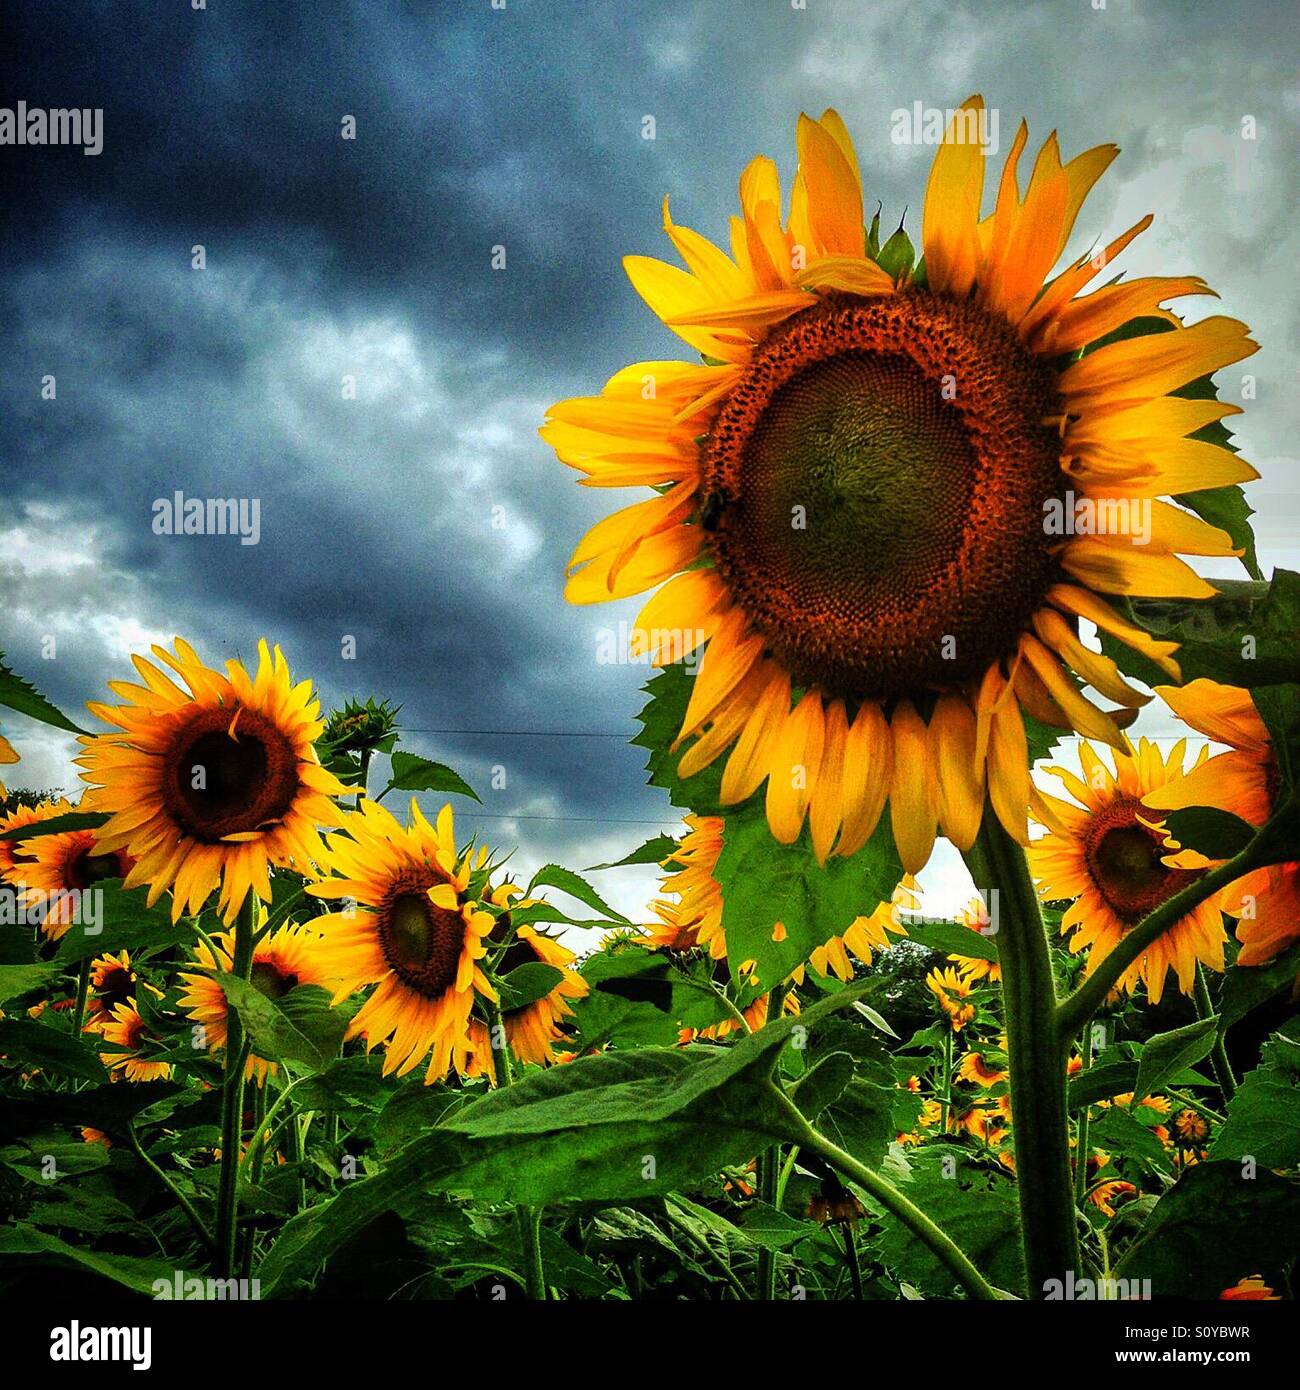 Sunflowers in stormy sky Stock Photo